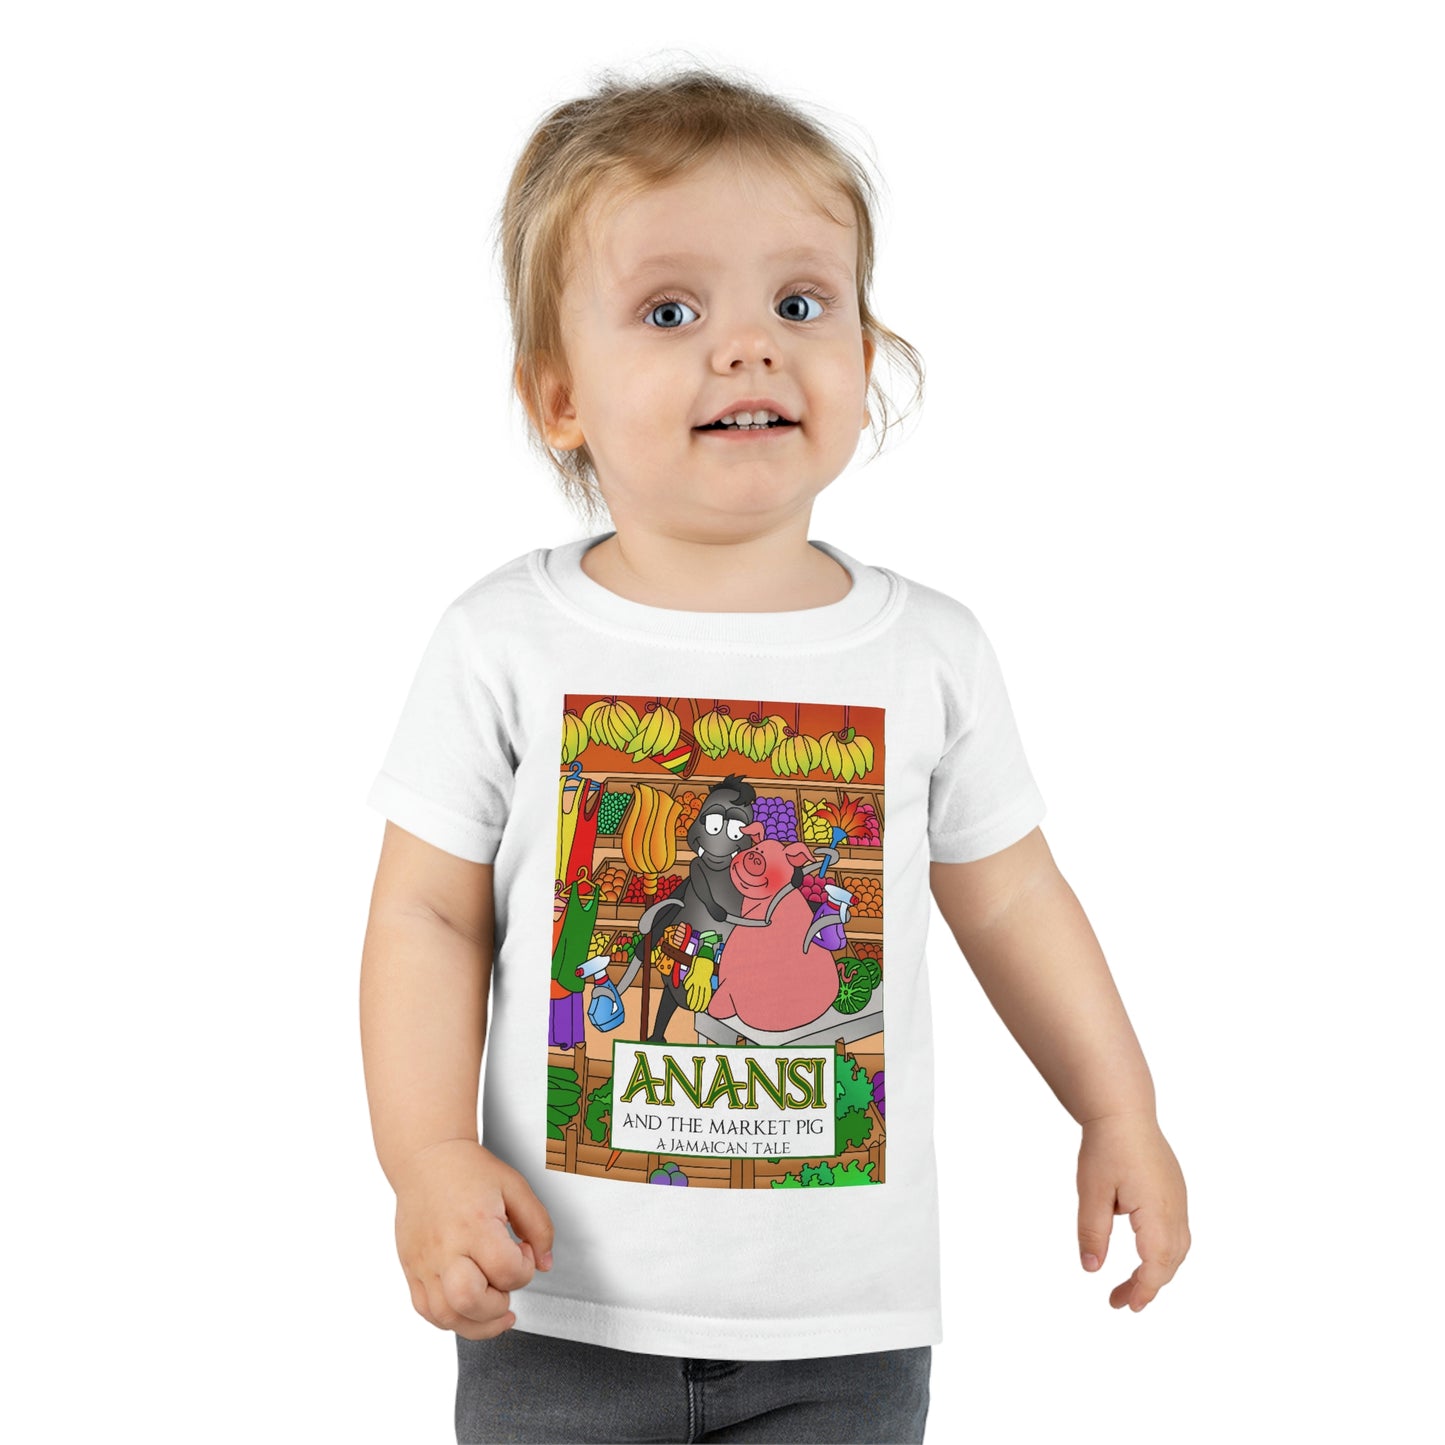 Anansi and the Market Pig Toddler T-shirt